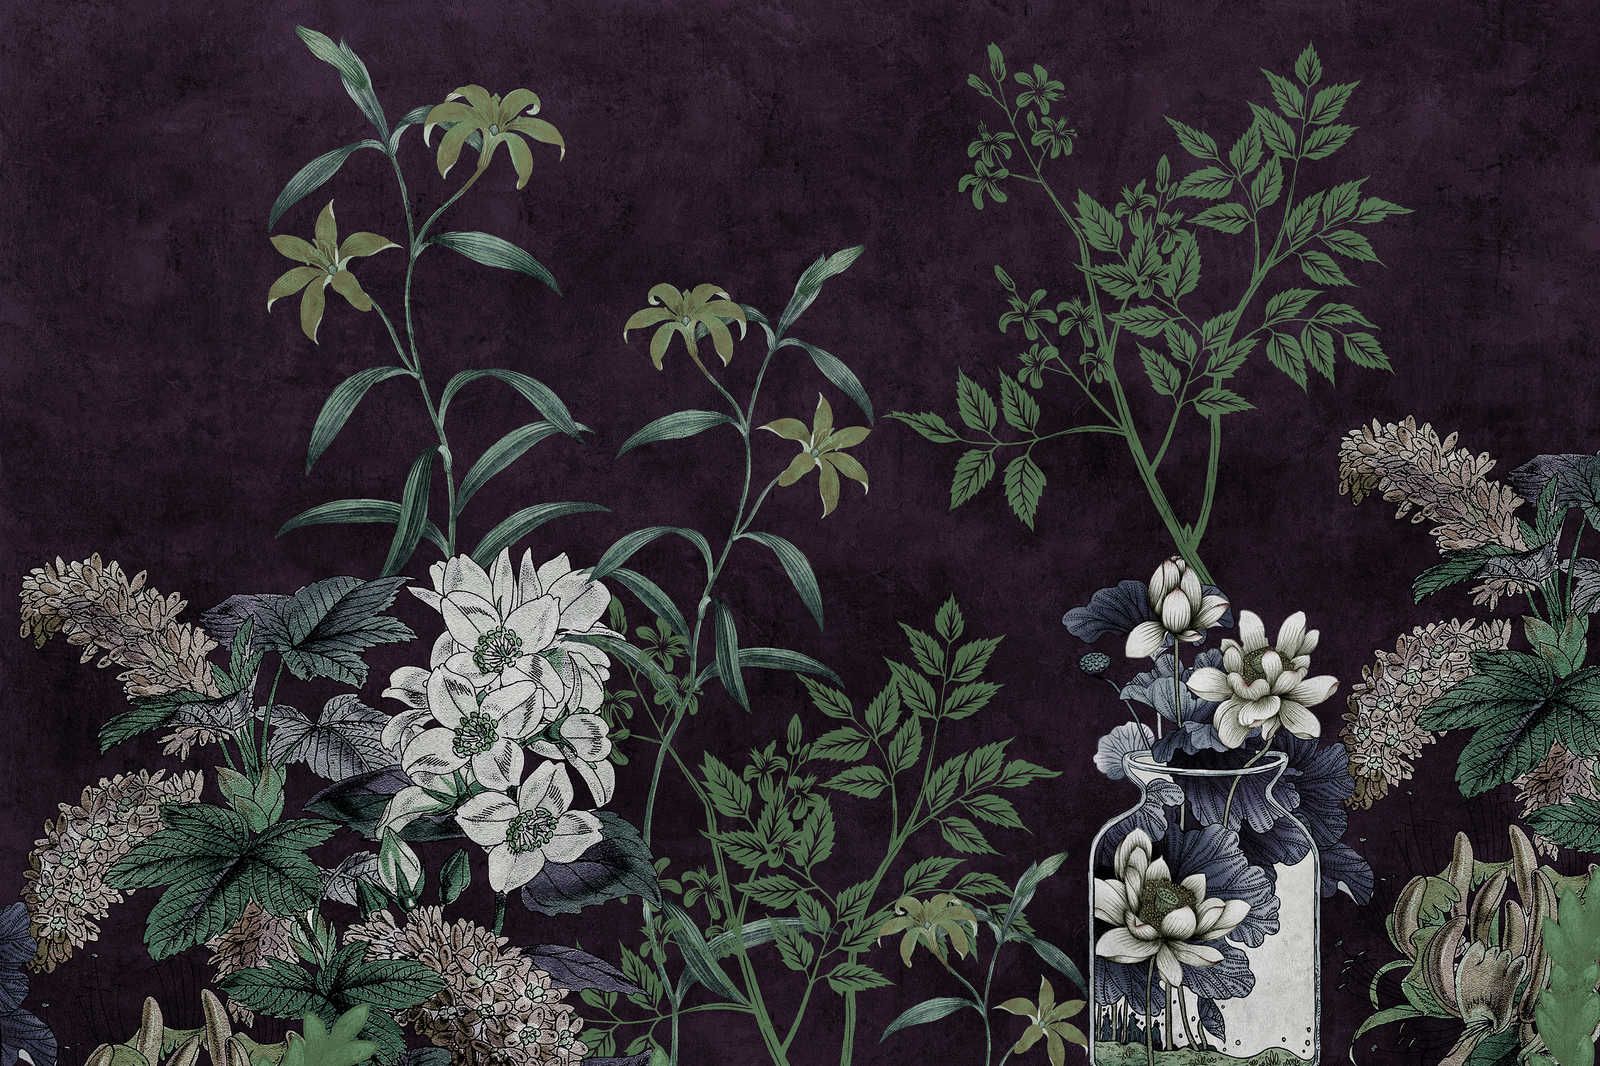             Camera oscura 1 - Pittura su tela nera con motivo botanico verde - 0,90 m x 0,60 m
        